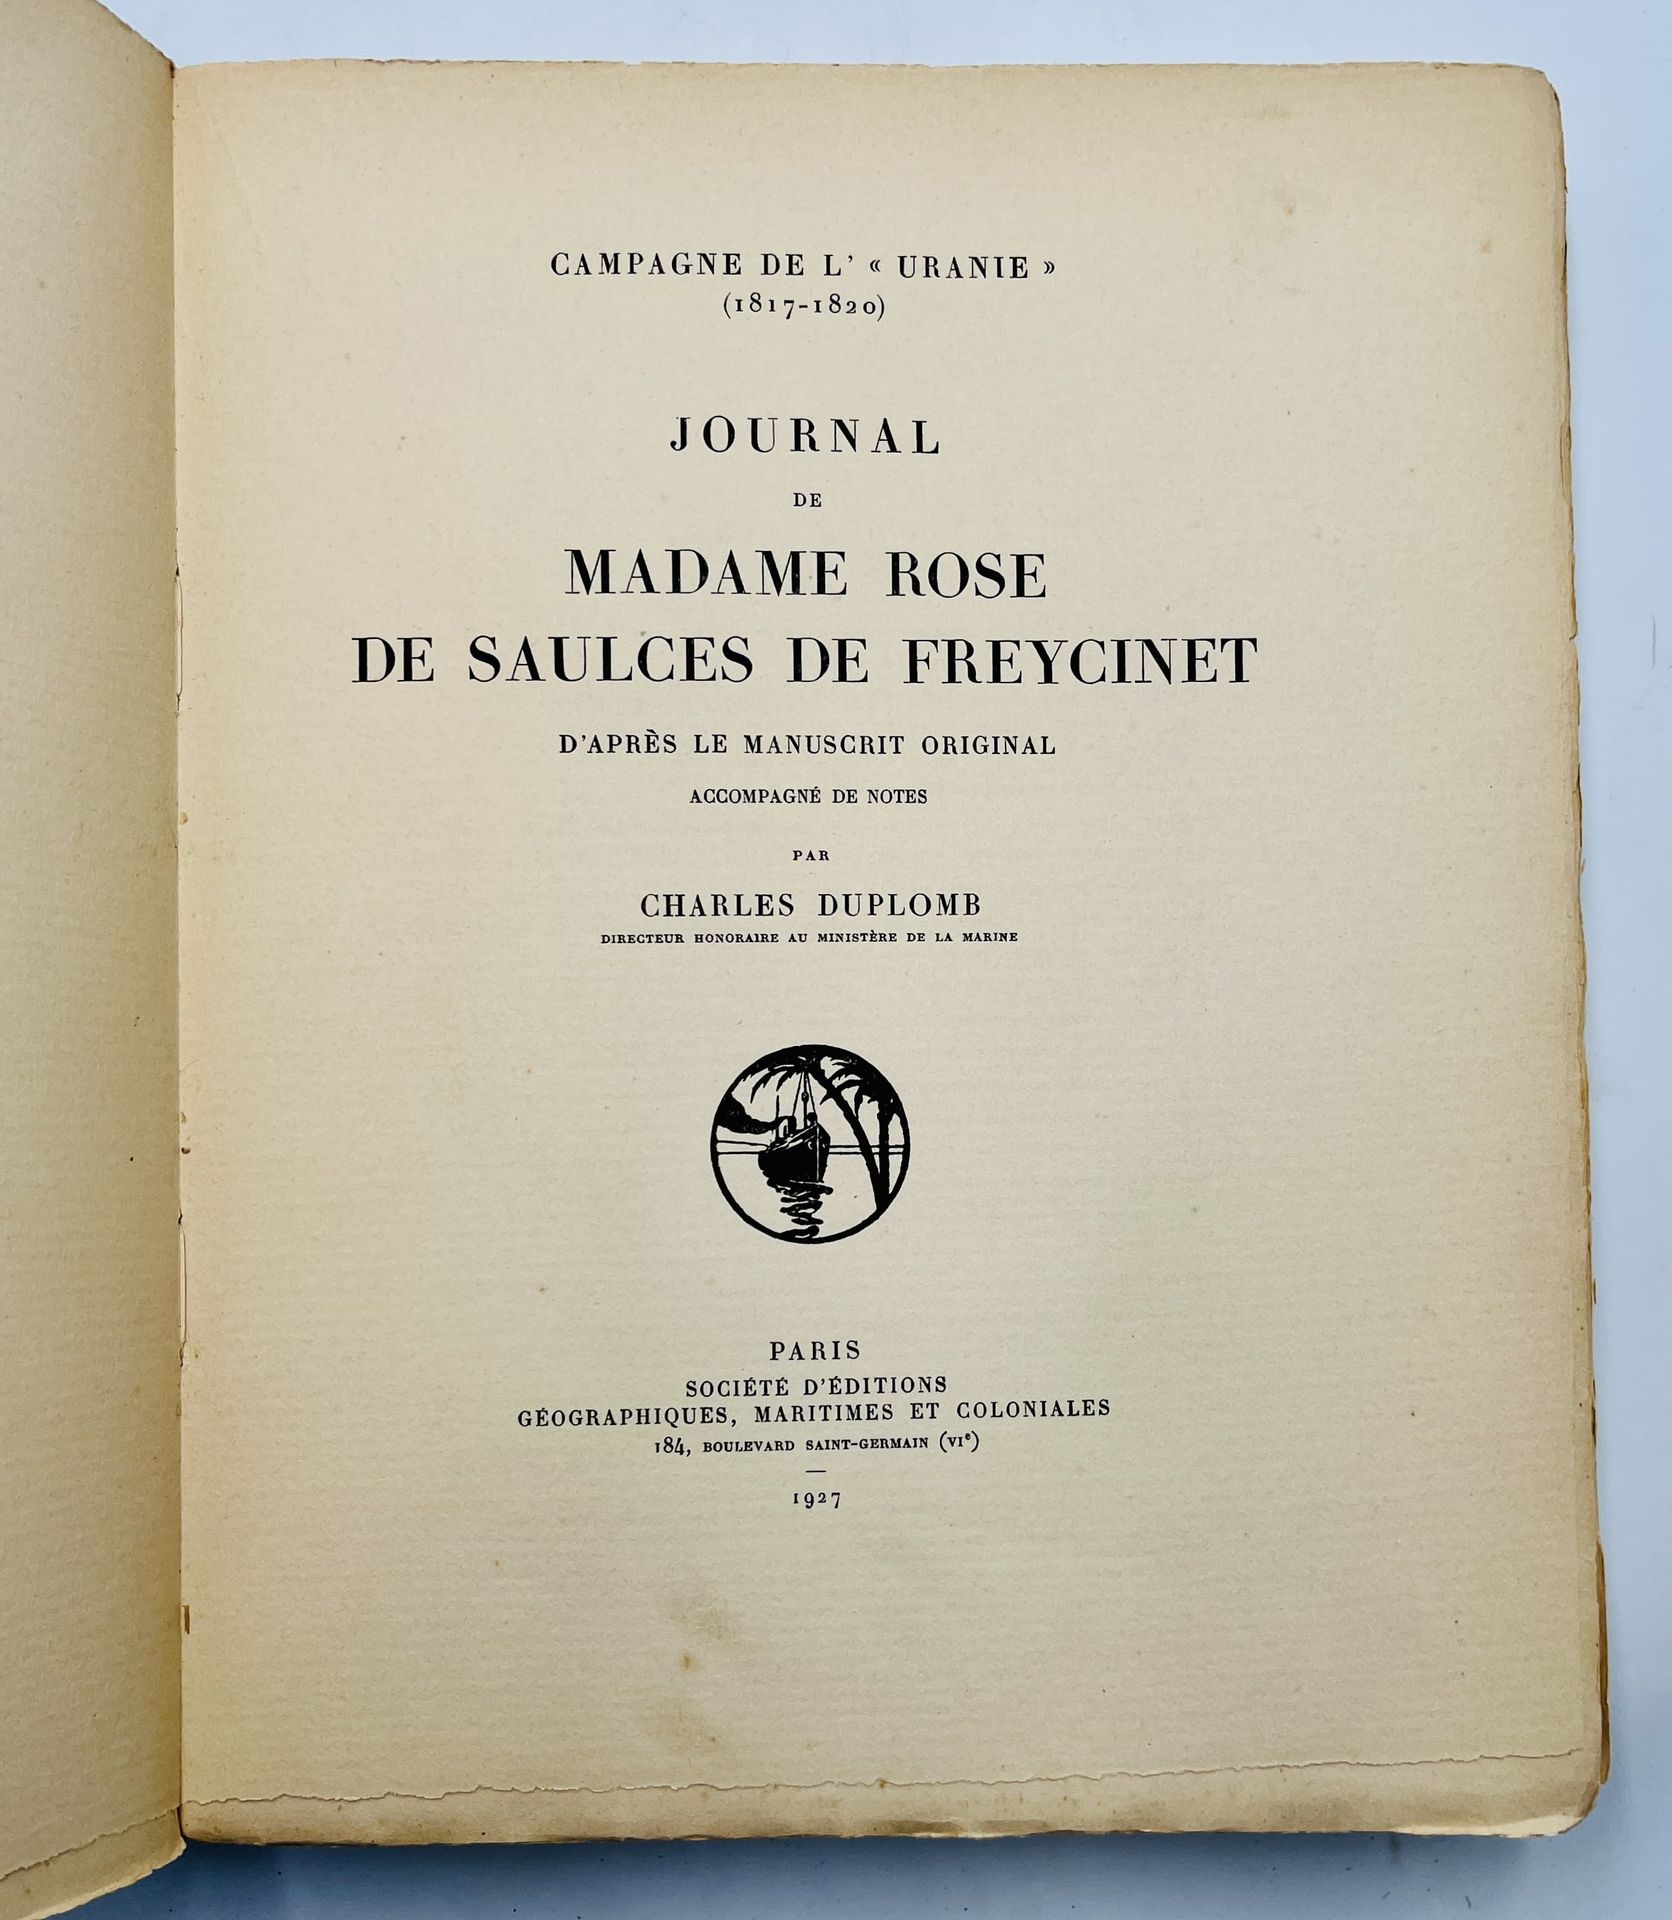 FREYCINET, Rose de Saulces de Campaign of the Uranie (1817-1820) according to th&hellip;